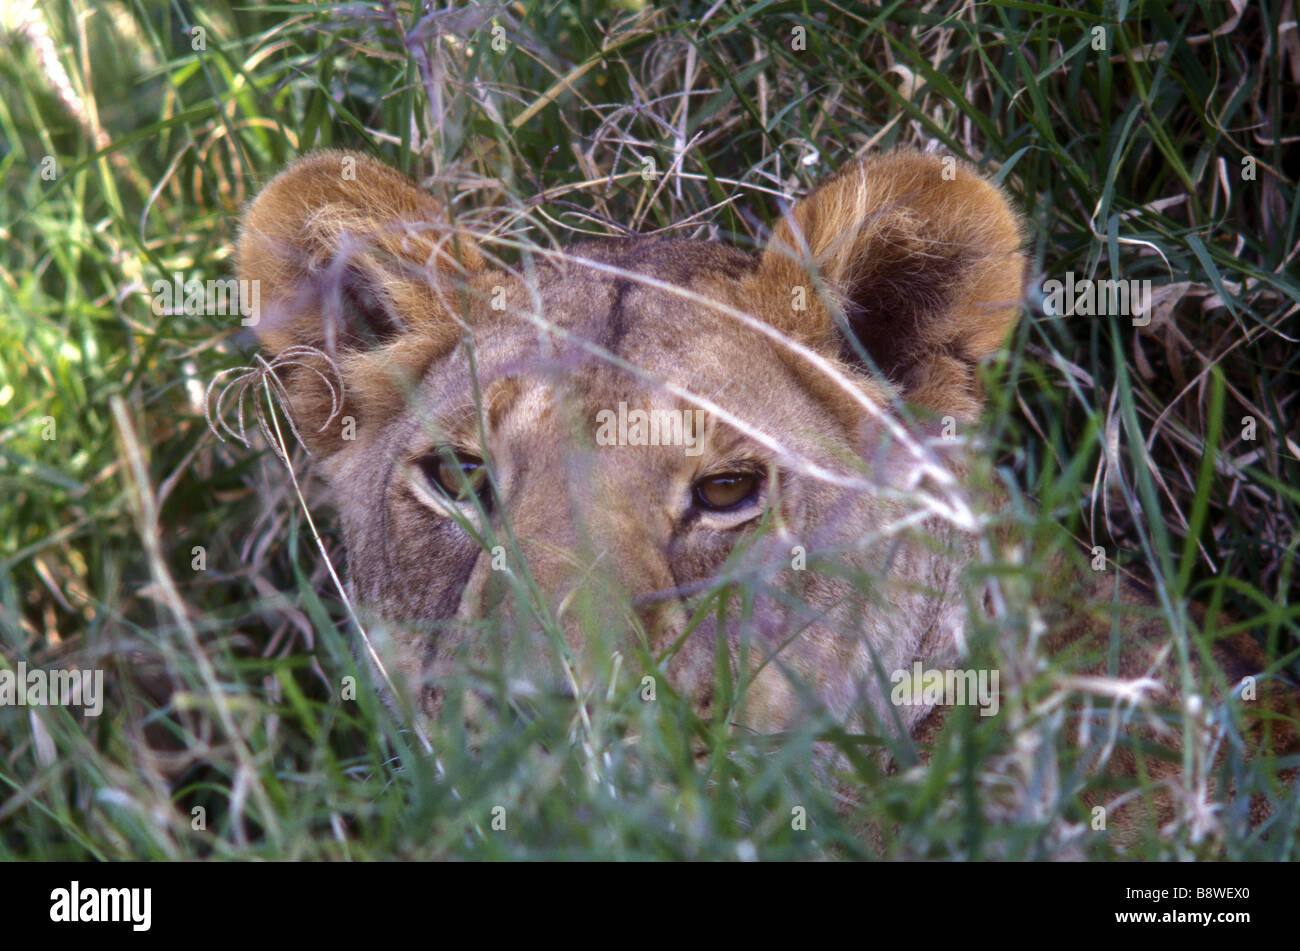 Alert Löwin gerade Beute aus Versteck unter lange Gras- und Unterholz Serengeti Nationalpark Tansania Ostafrika Stockfoto